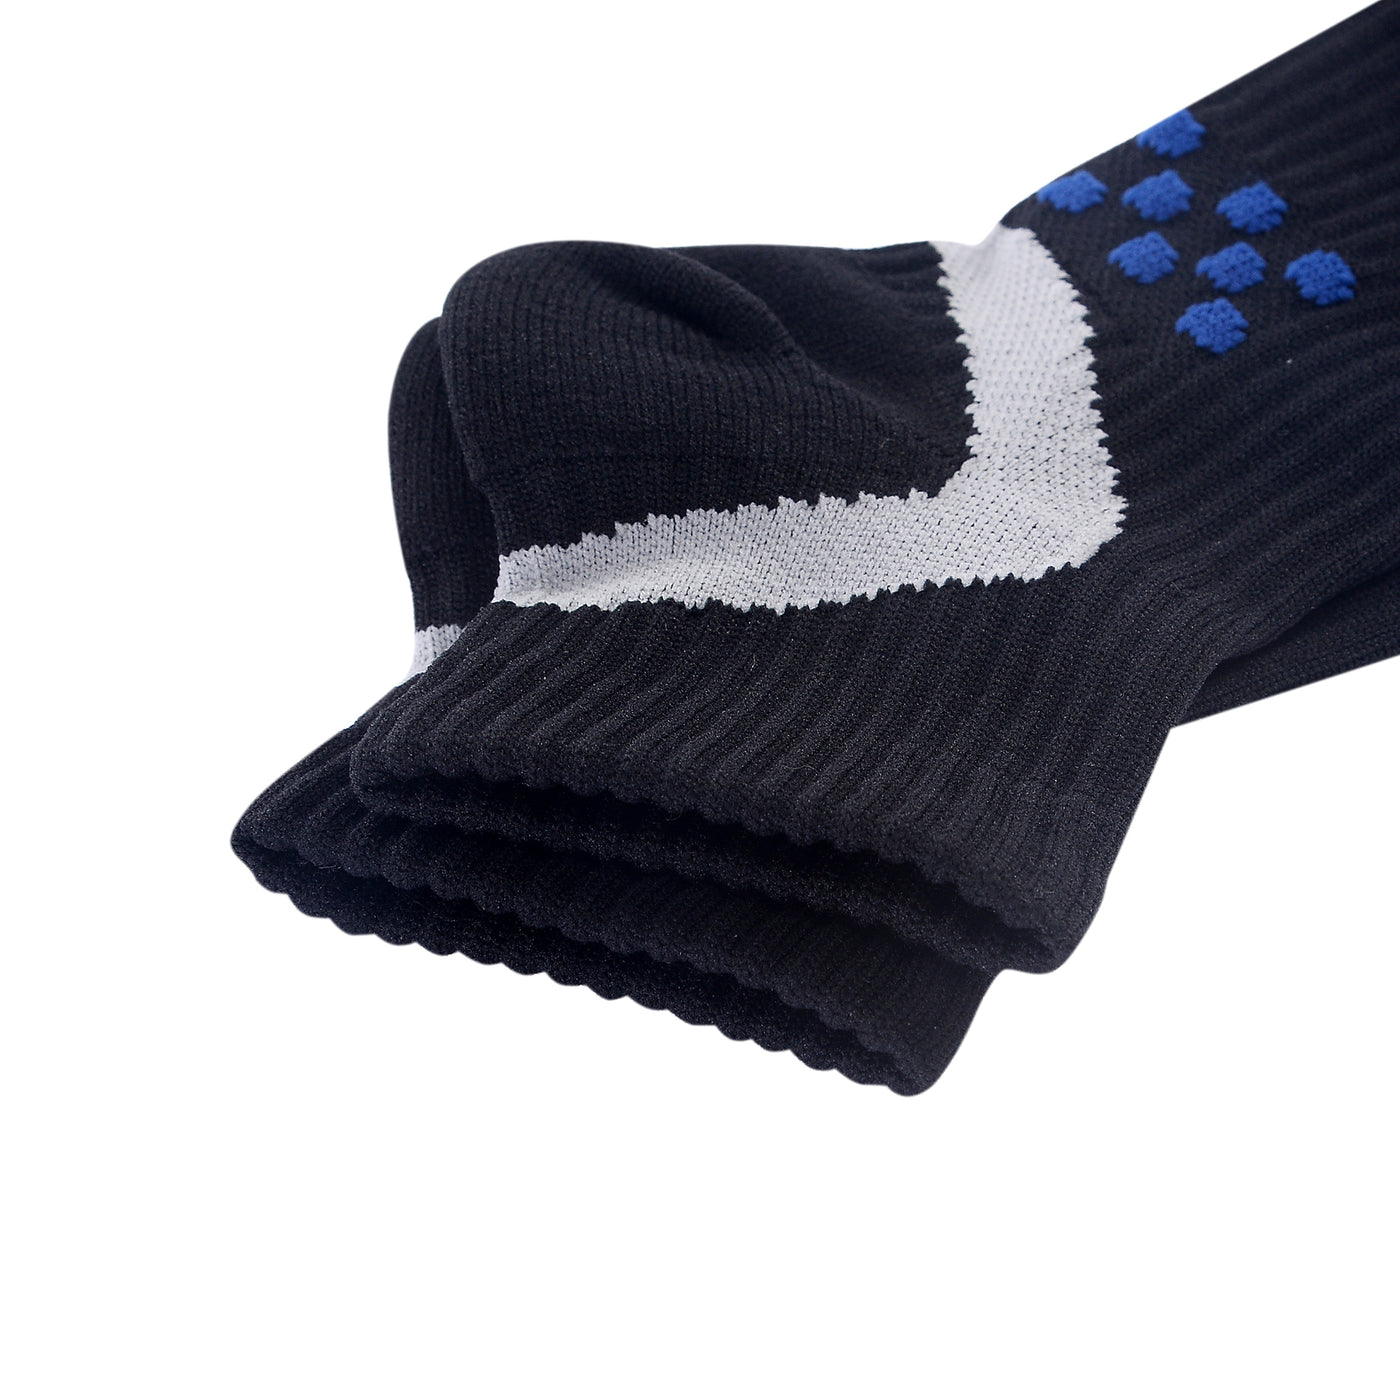 COOLMAX Professional Running Socks - Compression Massage - Black - Size UK 7 - 11